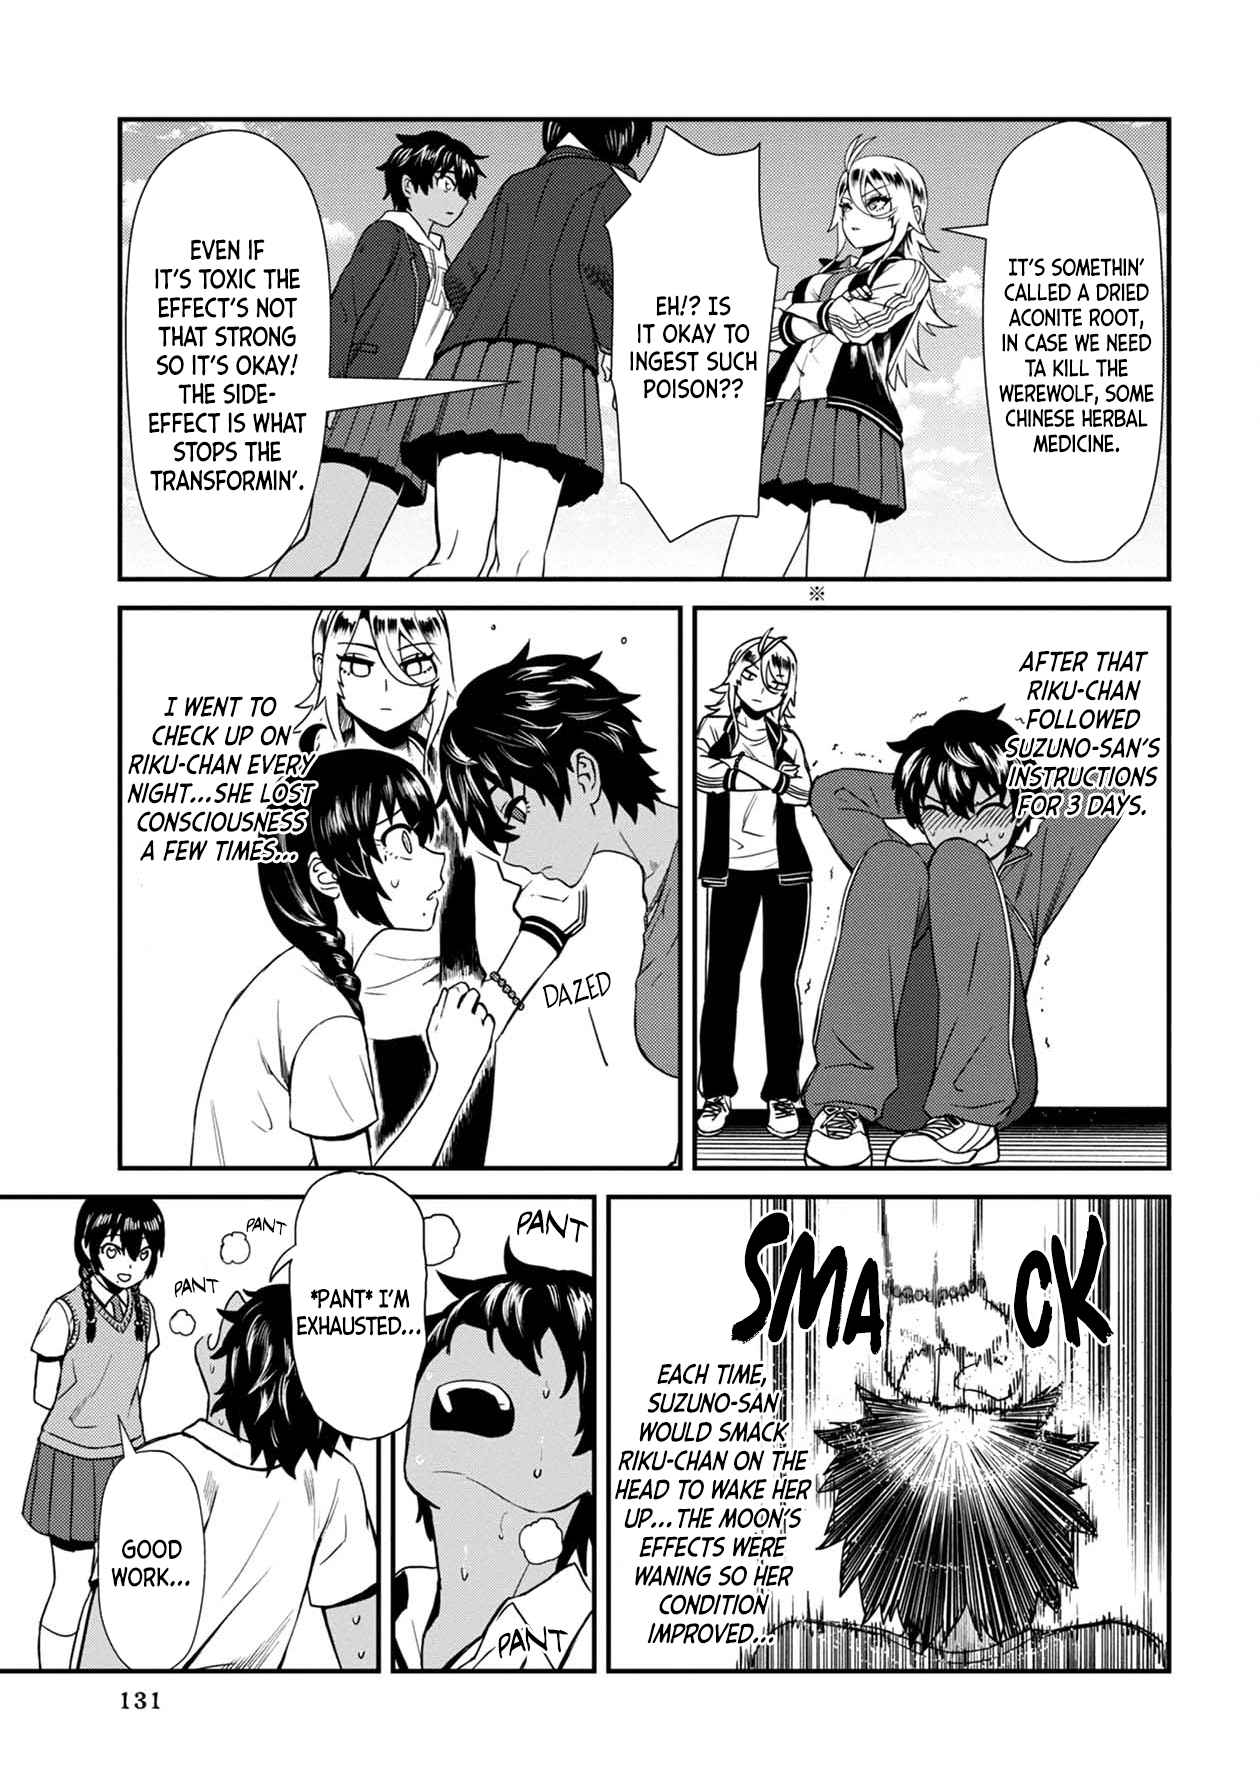 Furyou Taimashi Reina Vol. 1 Ch. 8 Exorcism #8 The Tall Girl